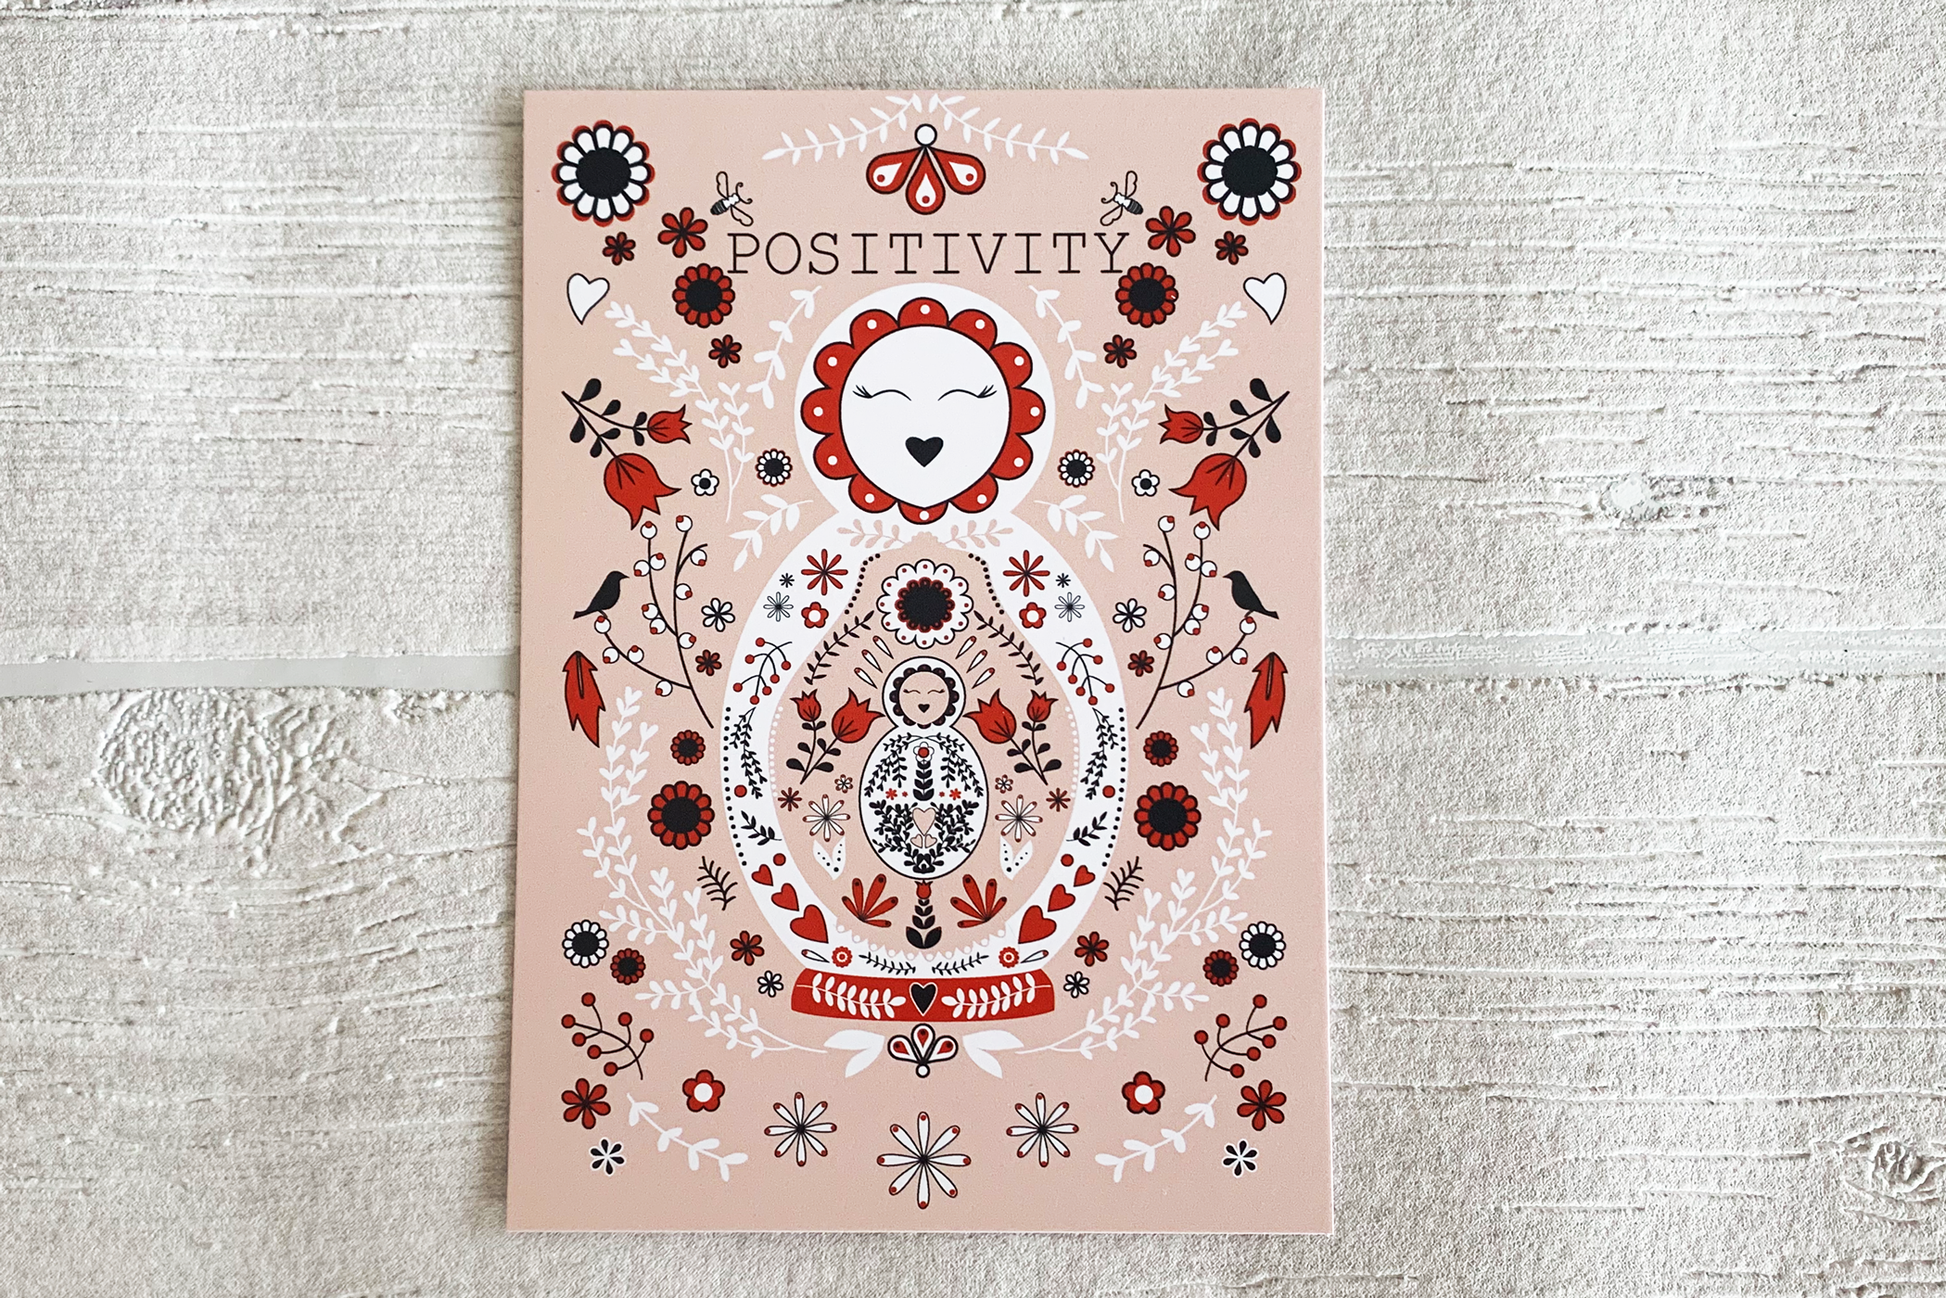 "Positivity" Mantra Card